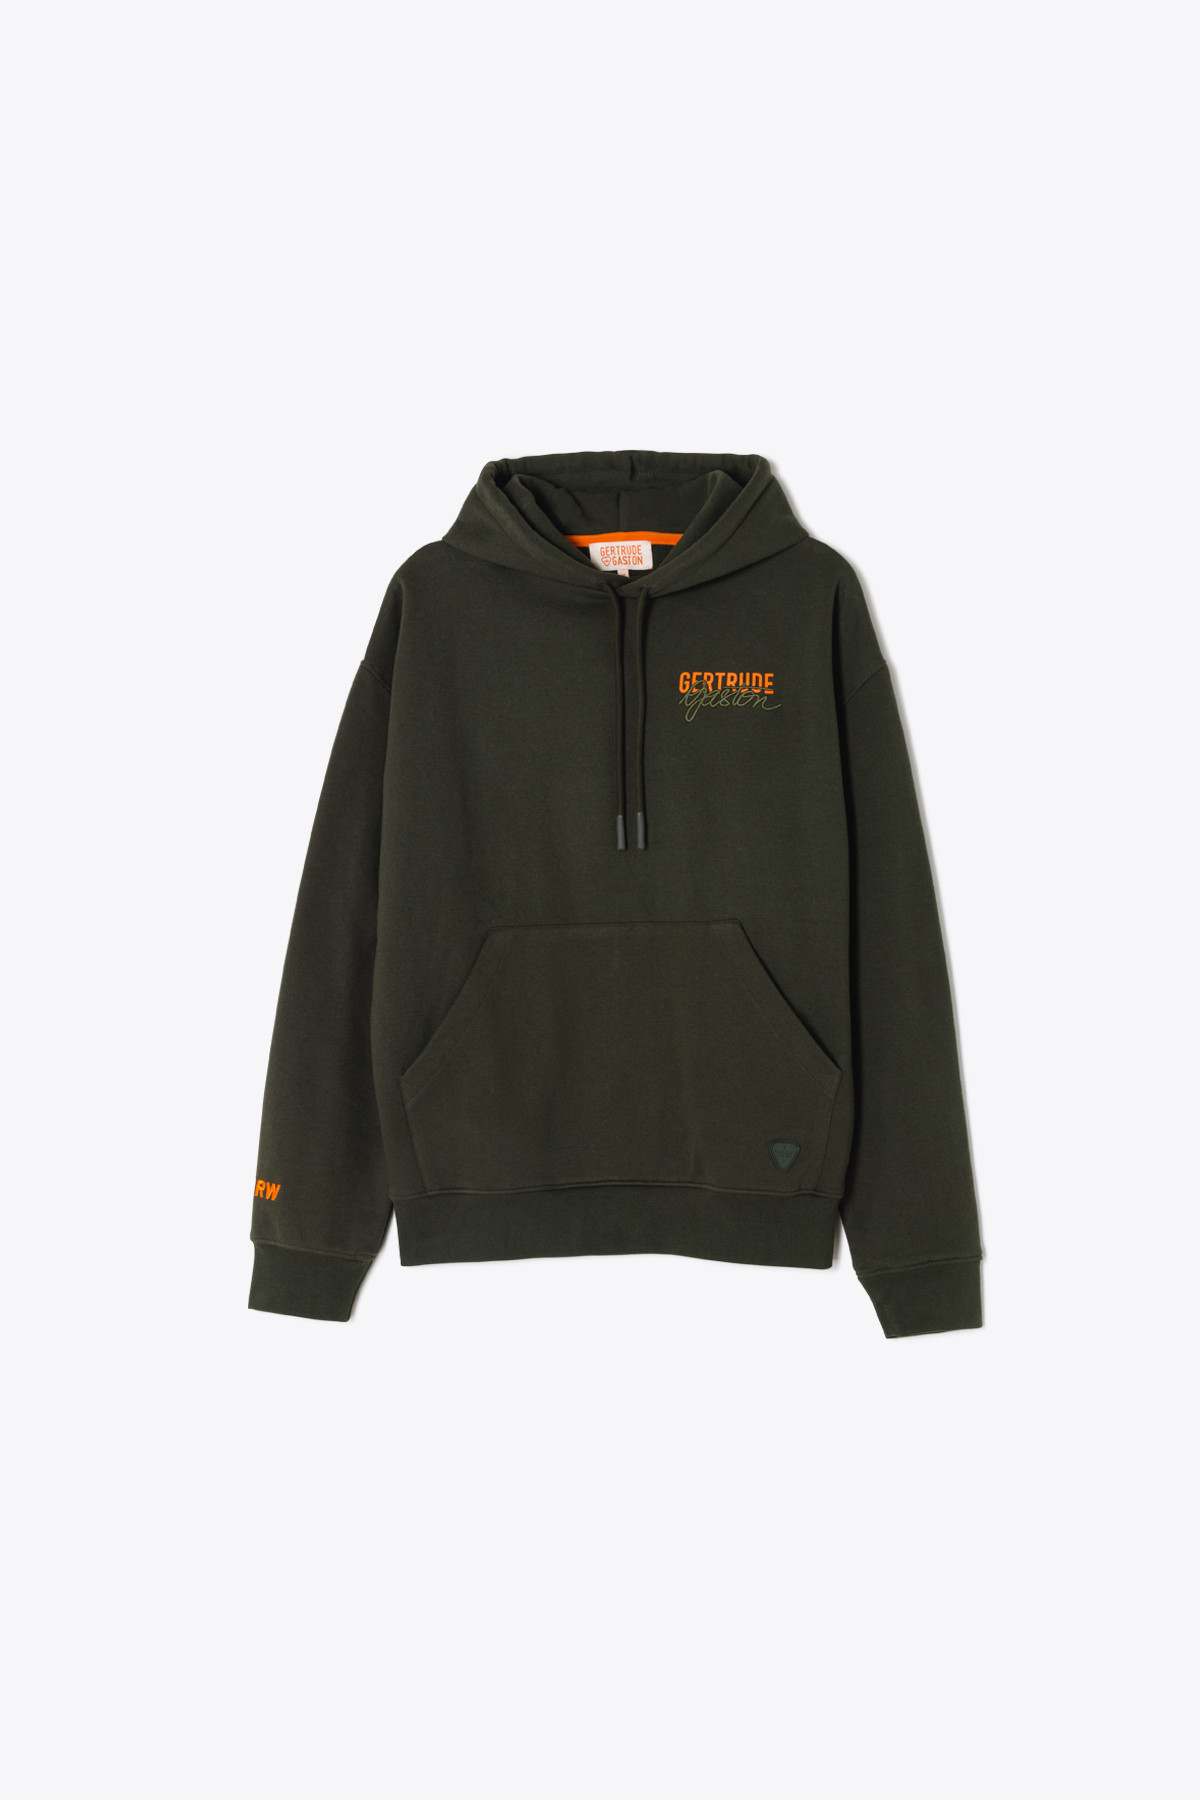 AntoBr unisex khaki hoodie